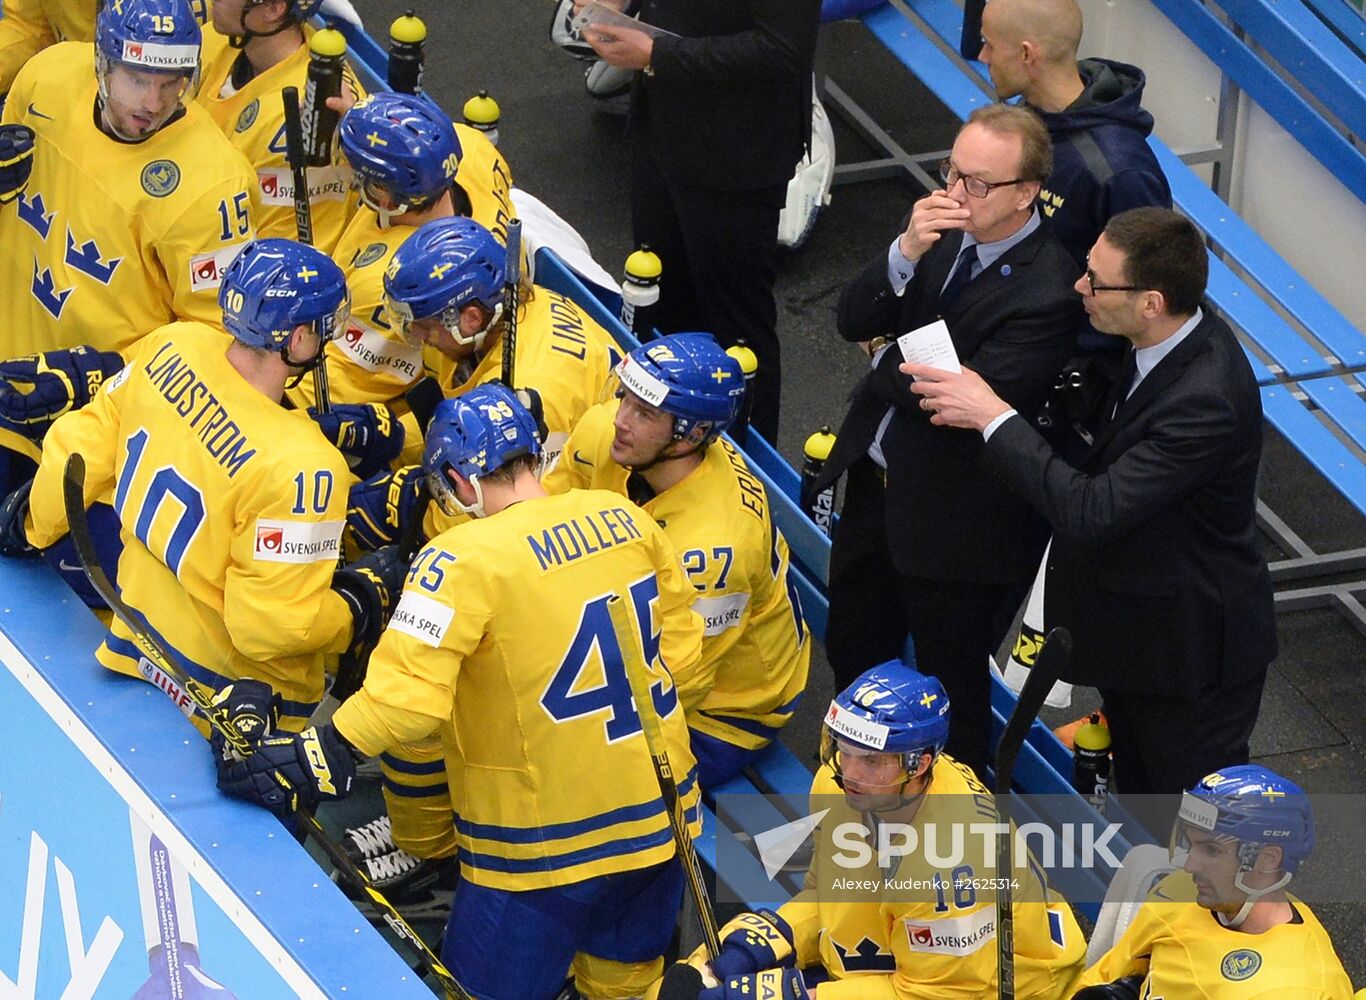 2015 IIHF Ice Hockey World Championship. Sweden vs. Russia